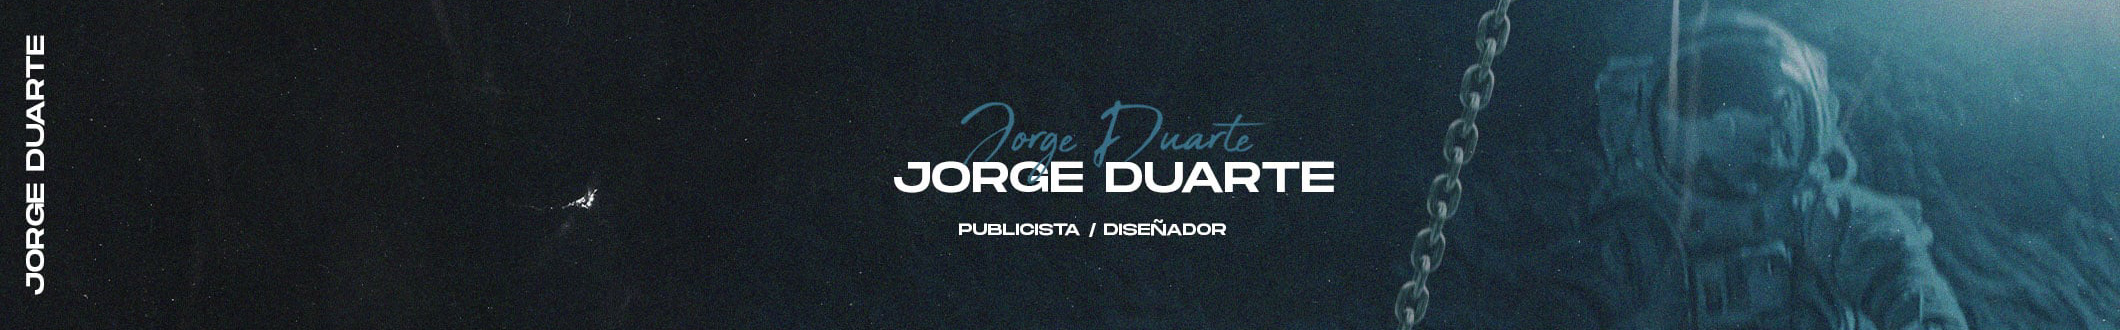 JorG Duarte's profile banner